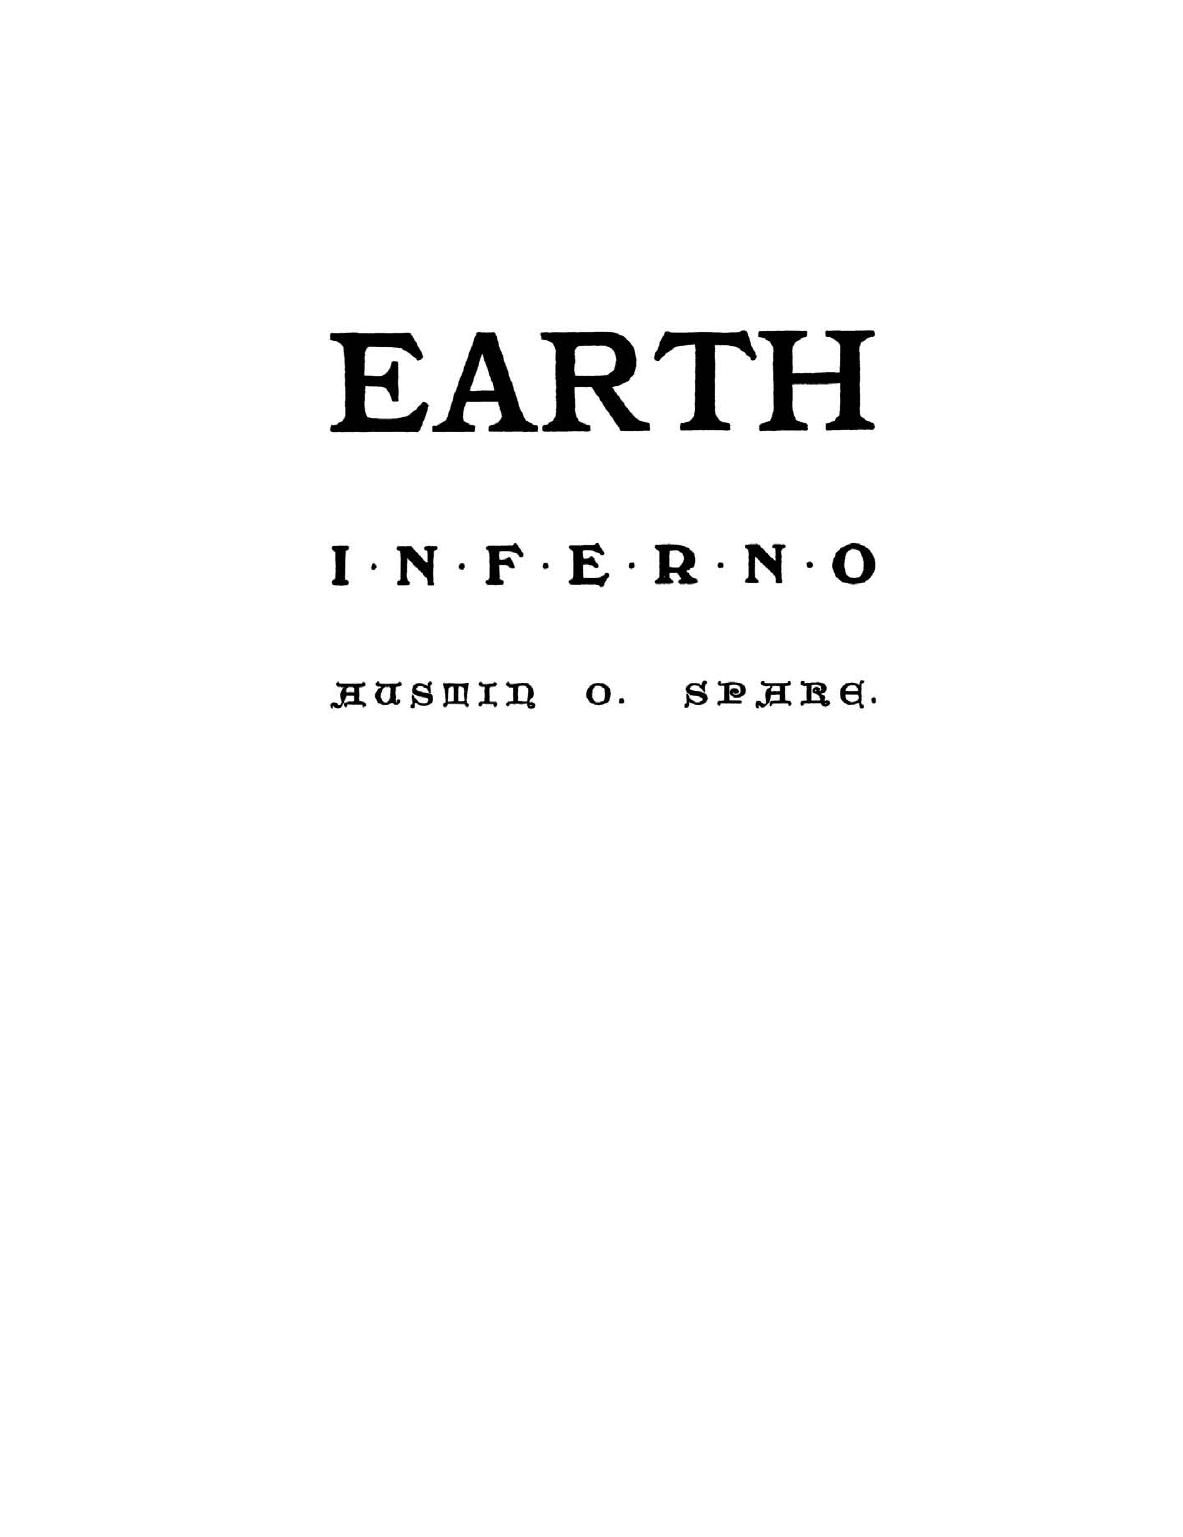 Earth Inferno